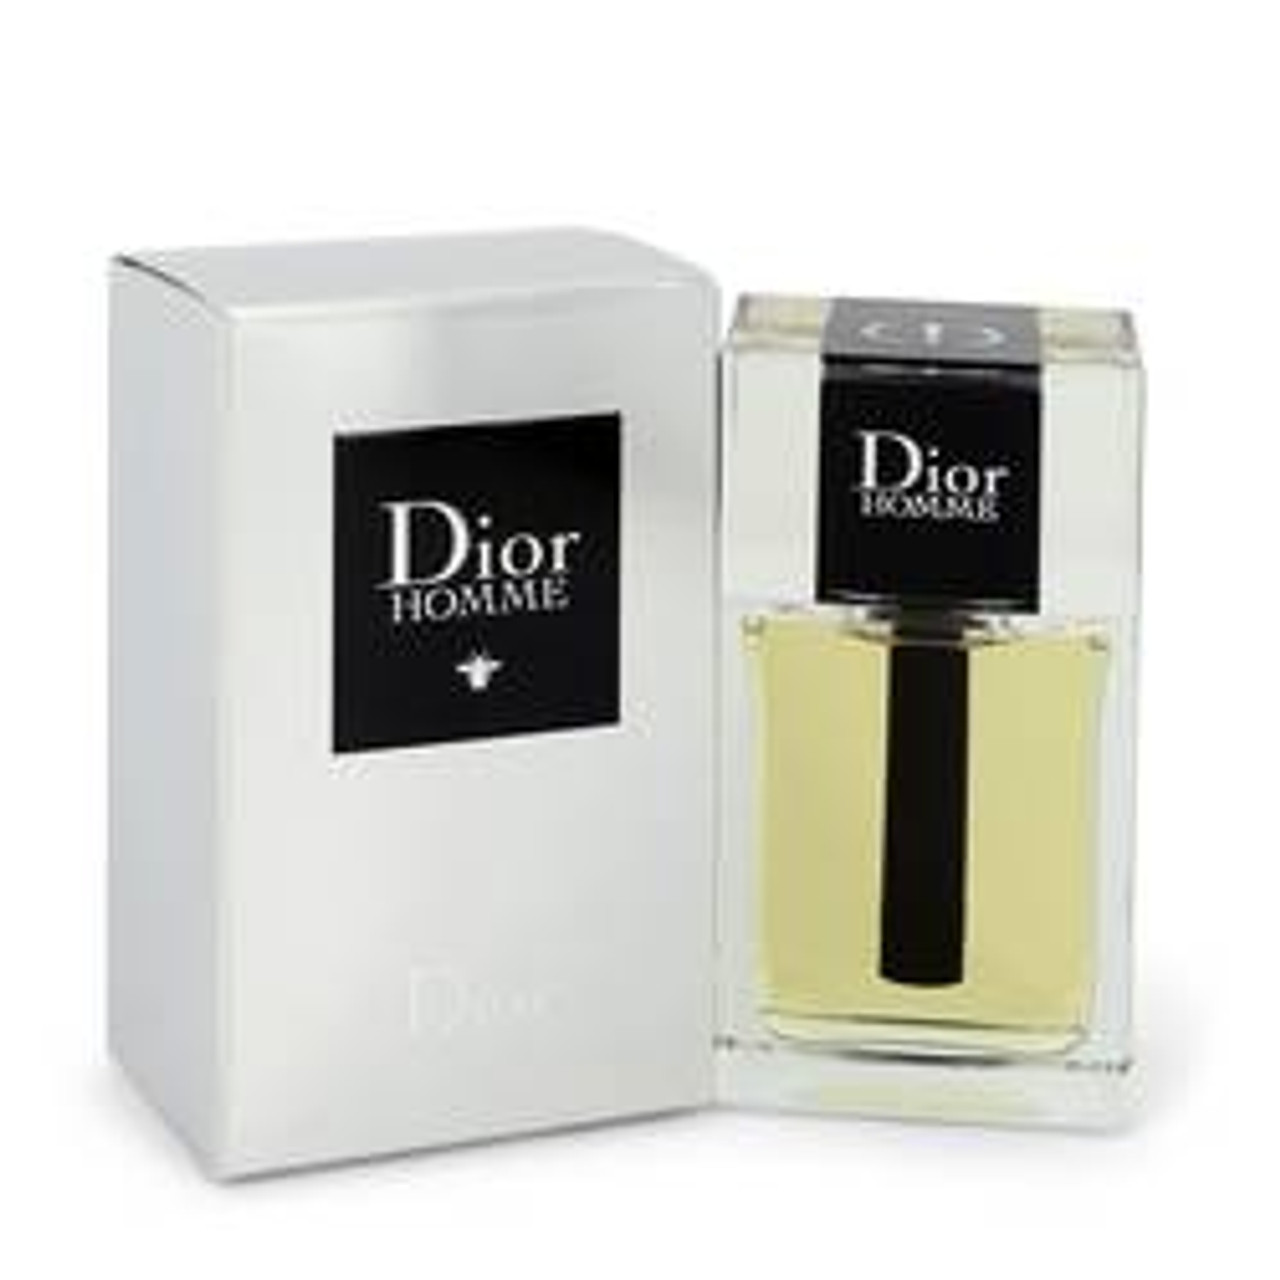 Dior Homme Cologne By Christian Dior Eau De Toilette Spray (New Packaging 2020) 1.7 oz for Men - *Pre-Order